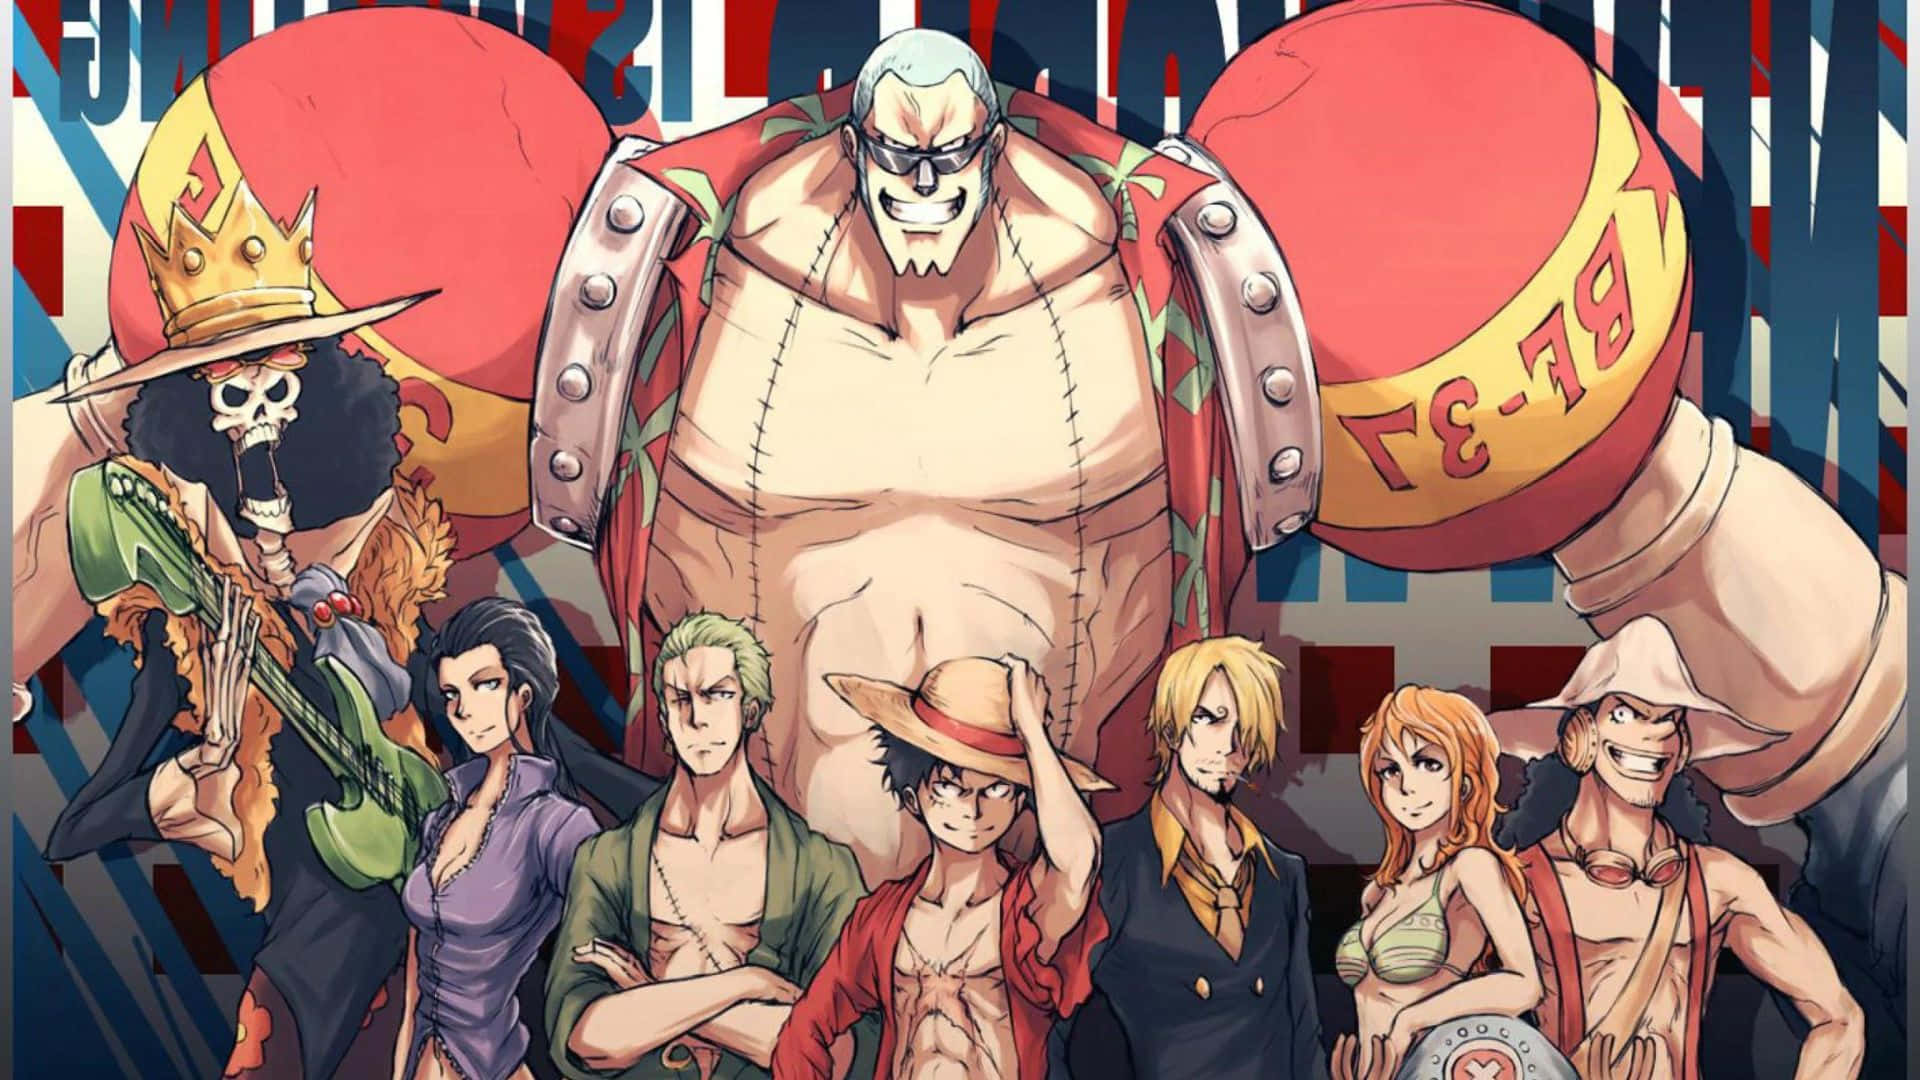 Enbakgrundsbild Med One Piece.